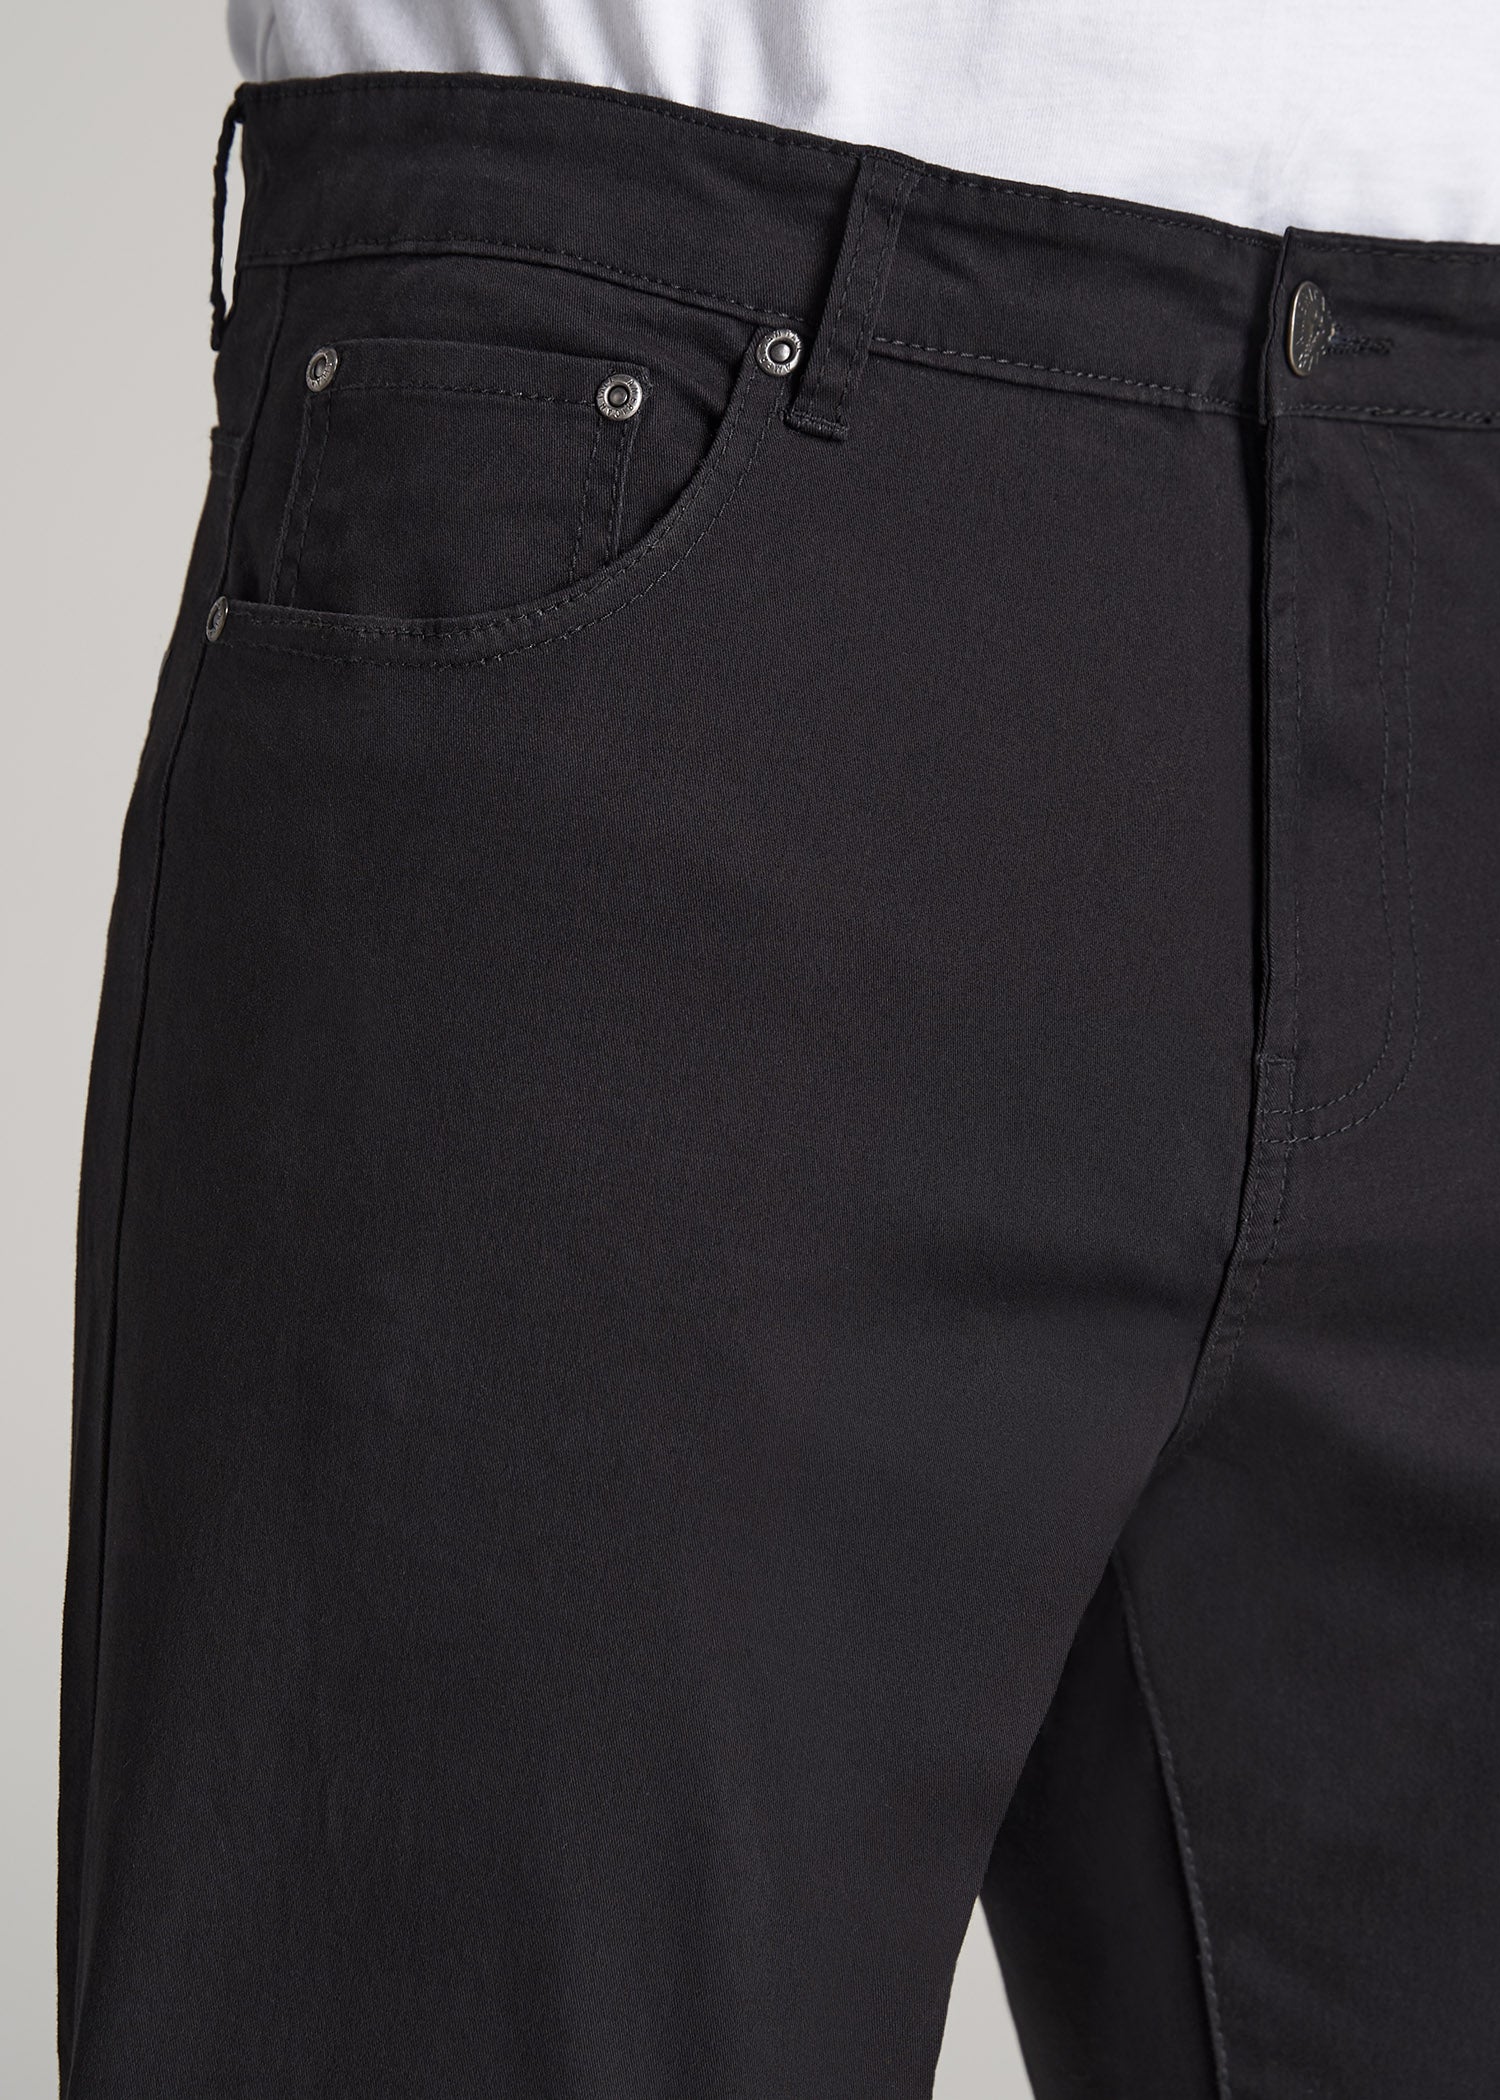 J1 Straight Leg Tall | Men Black Five-Pocket Pants Tall For American